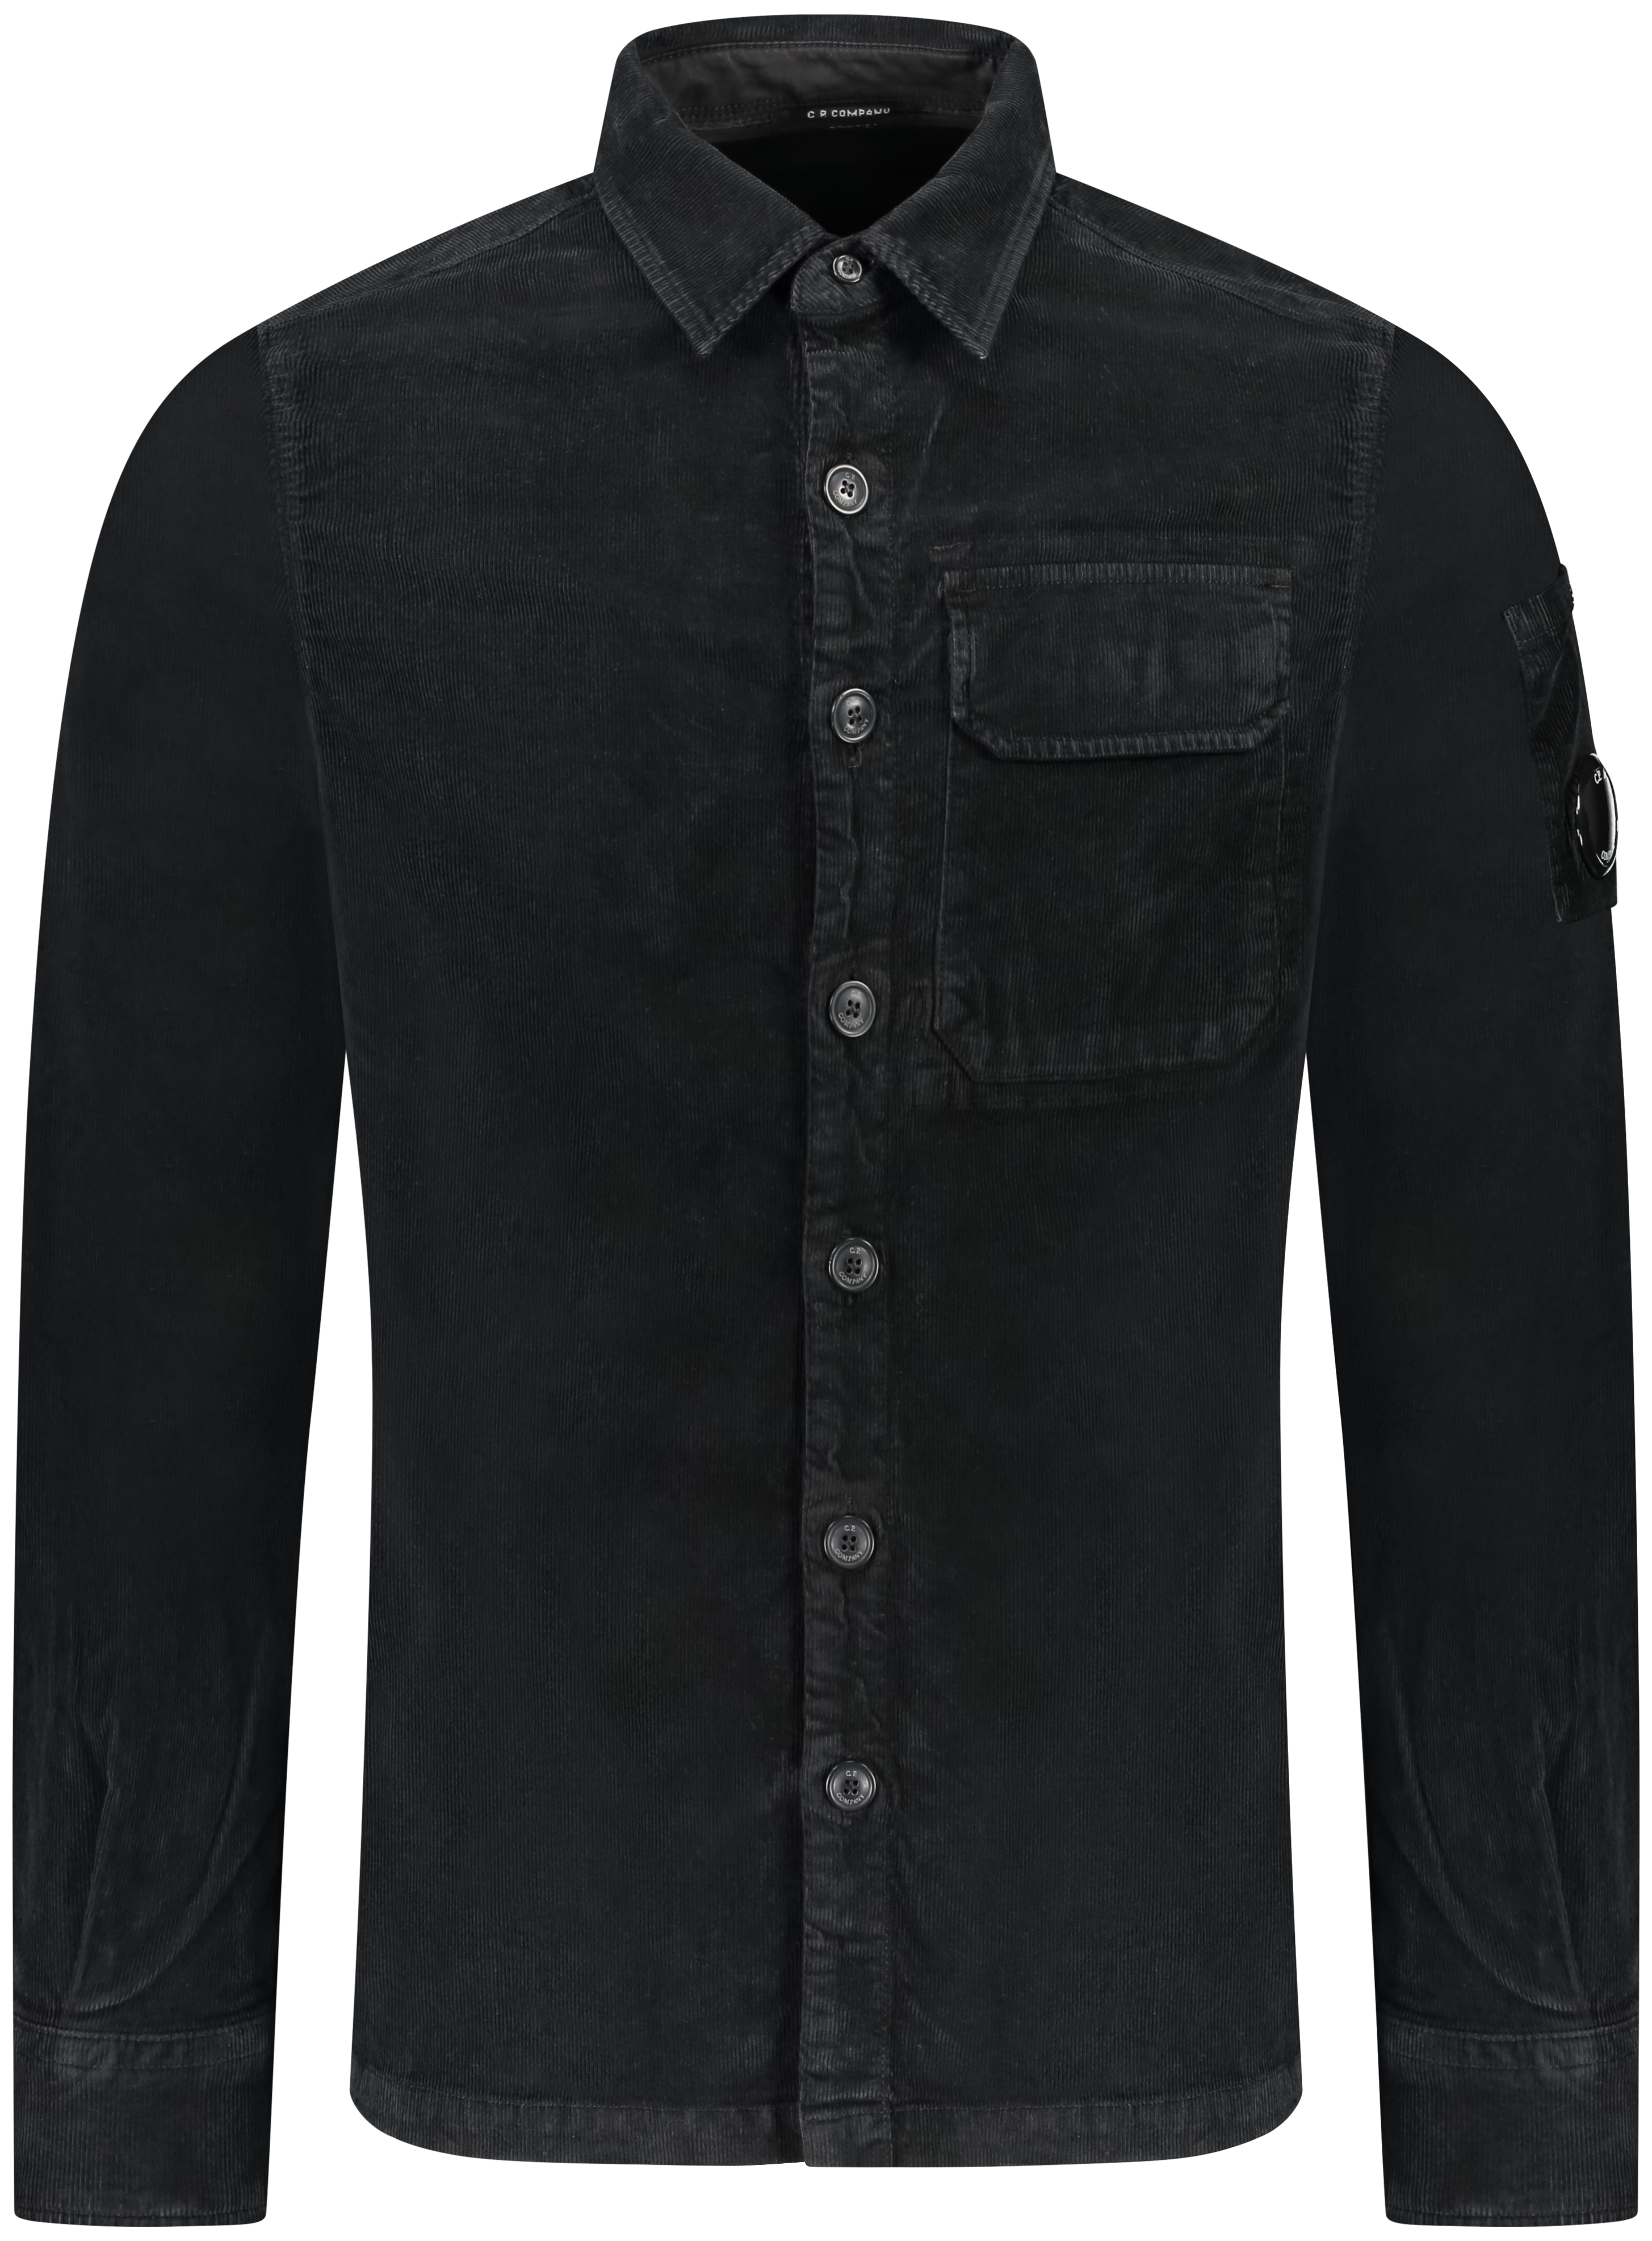 C.P. Company Overhemd Zwart product